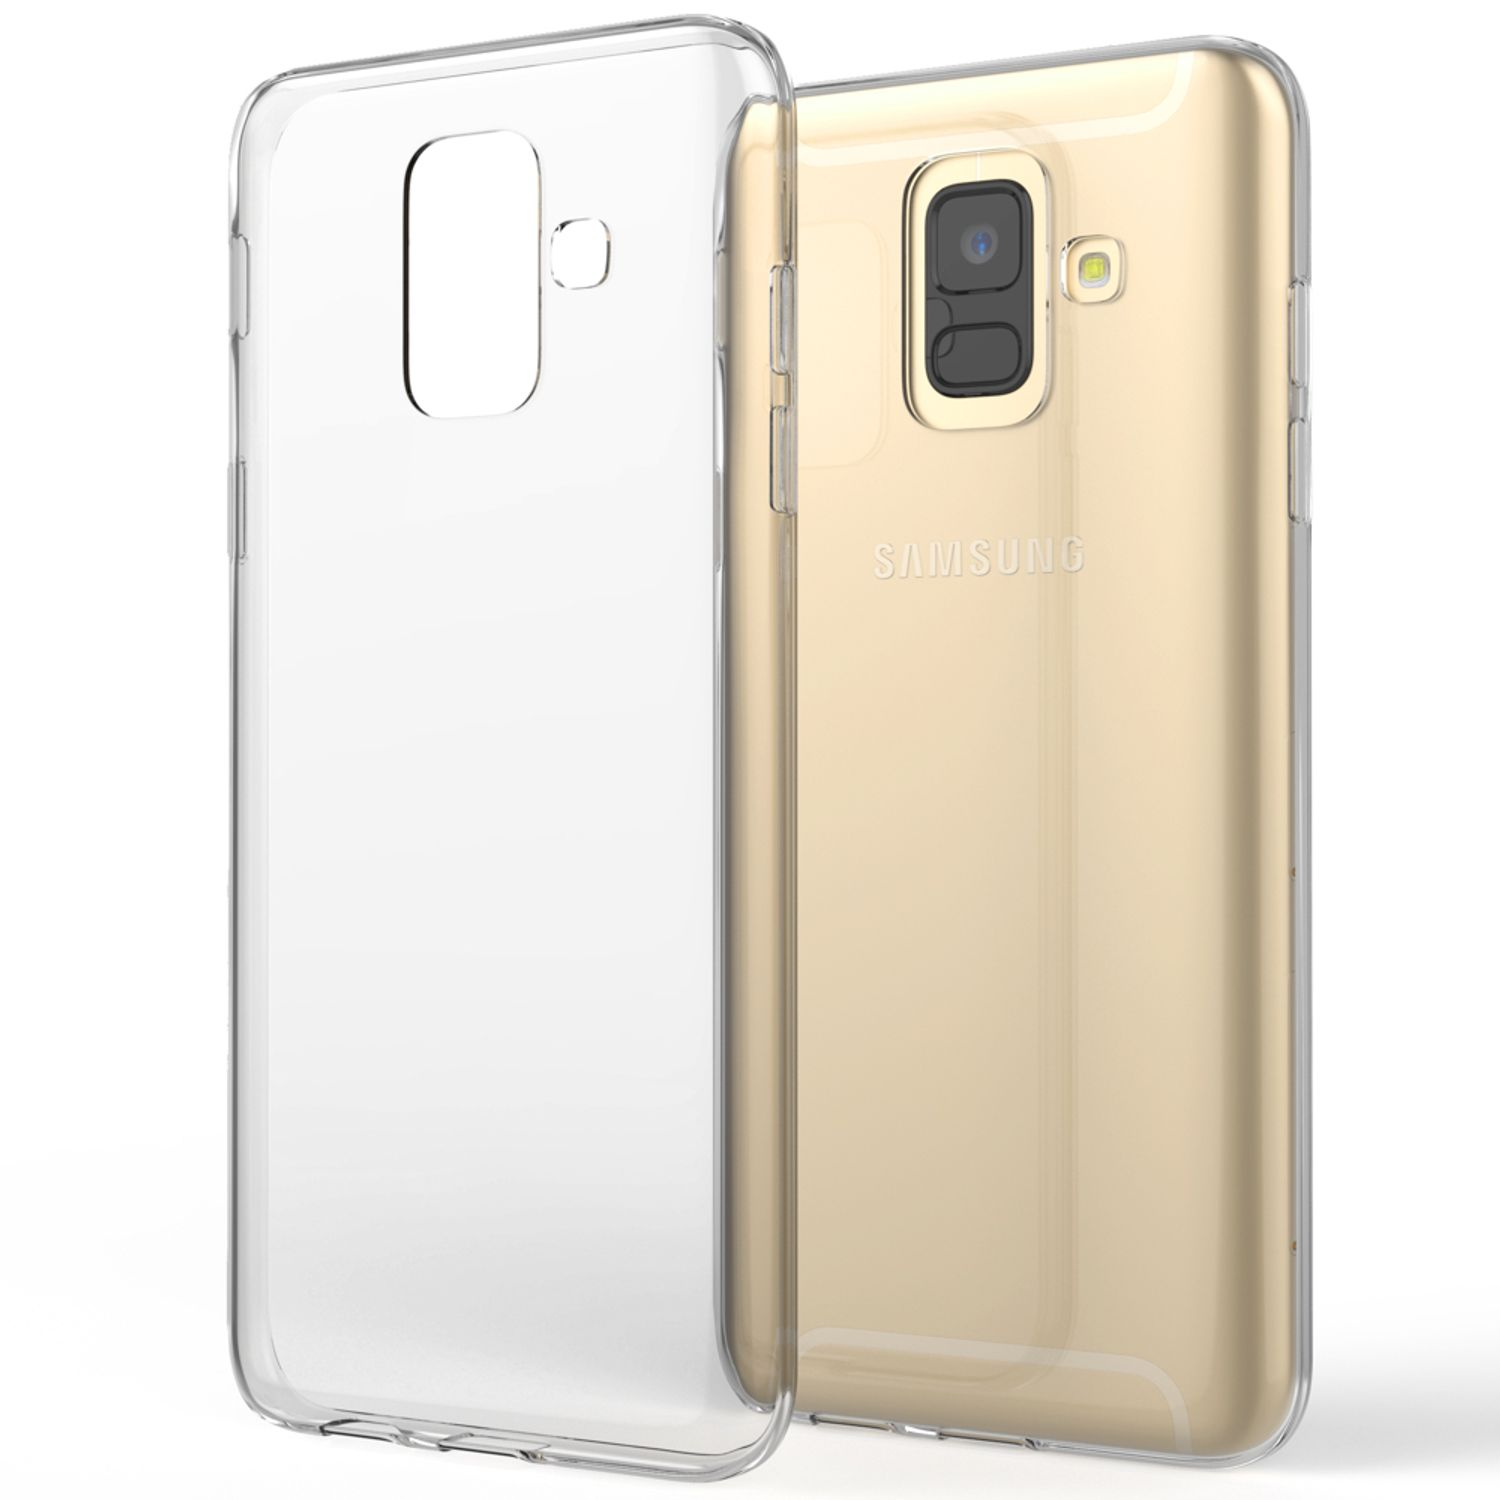 NALIA Klar Transparente A6, Galaxy Silikon Backcover, Hülle, Transparent Samsung